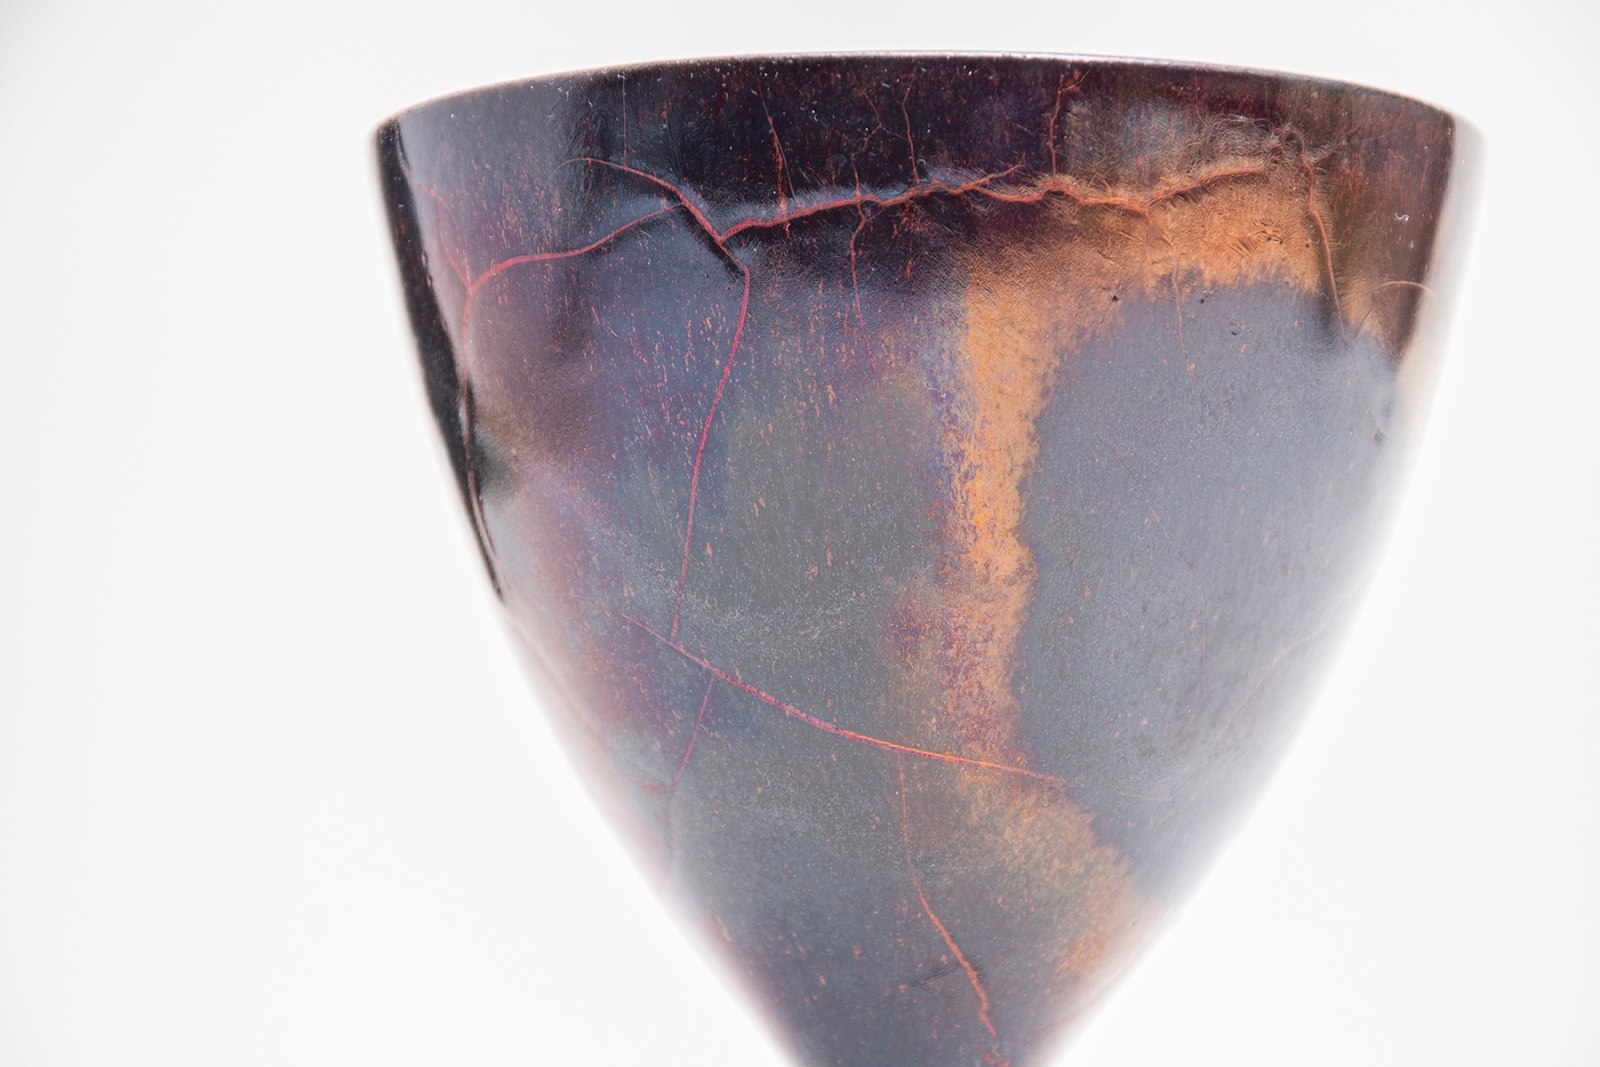 Vase with Copper Reduction Glaze